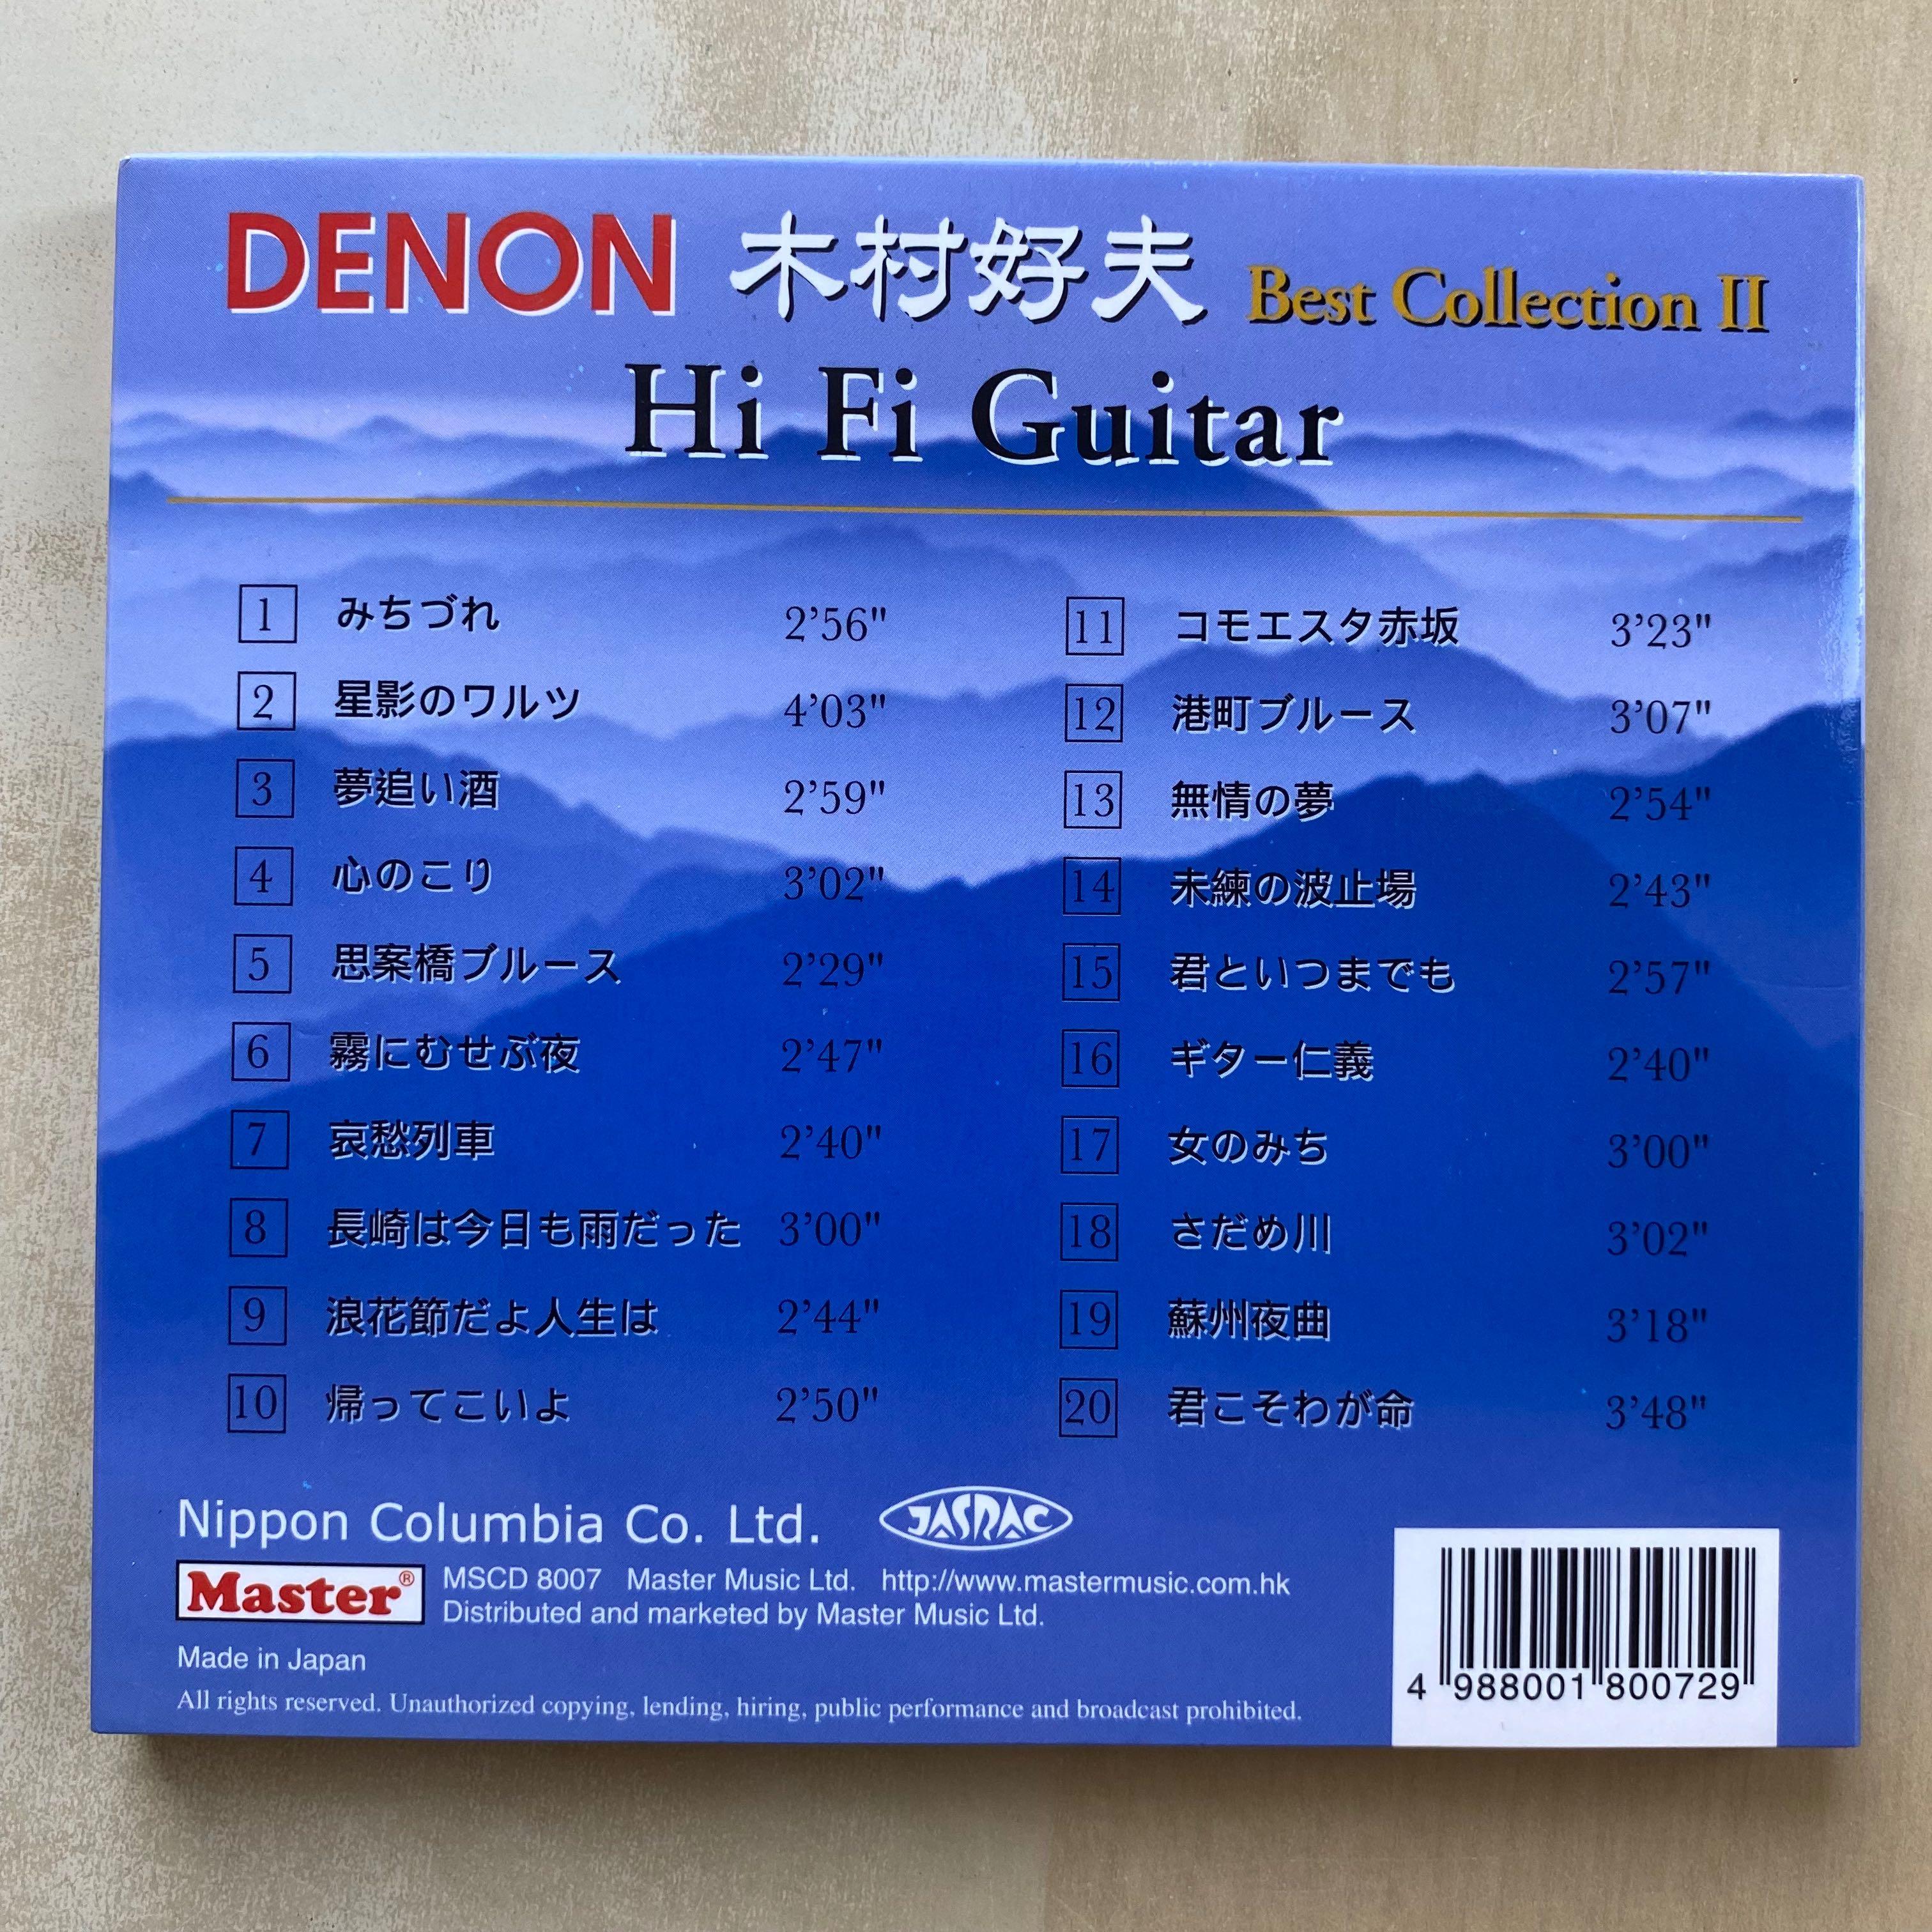 CD丨木村好夫最精選第二集/ Yoshio Kimura Denon HI FI Guitar Best